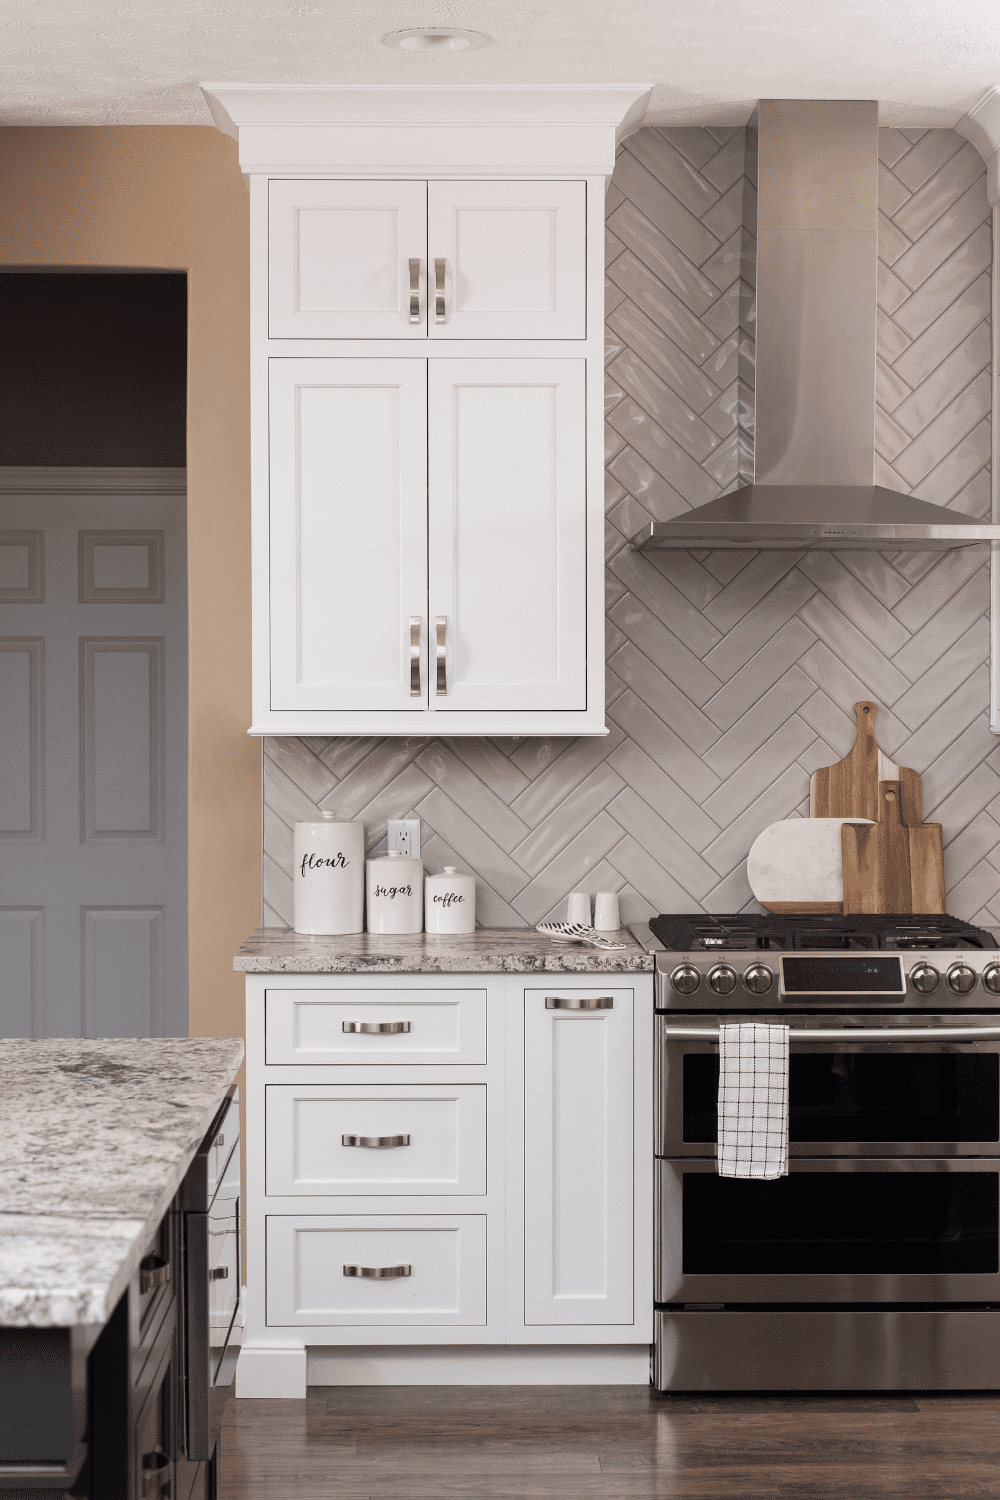 Nicholas Design Build | A versatile kitchen with white cabinets and granite counter tops.